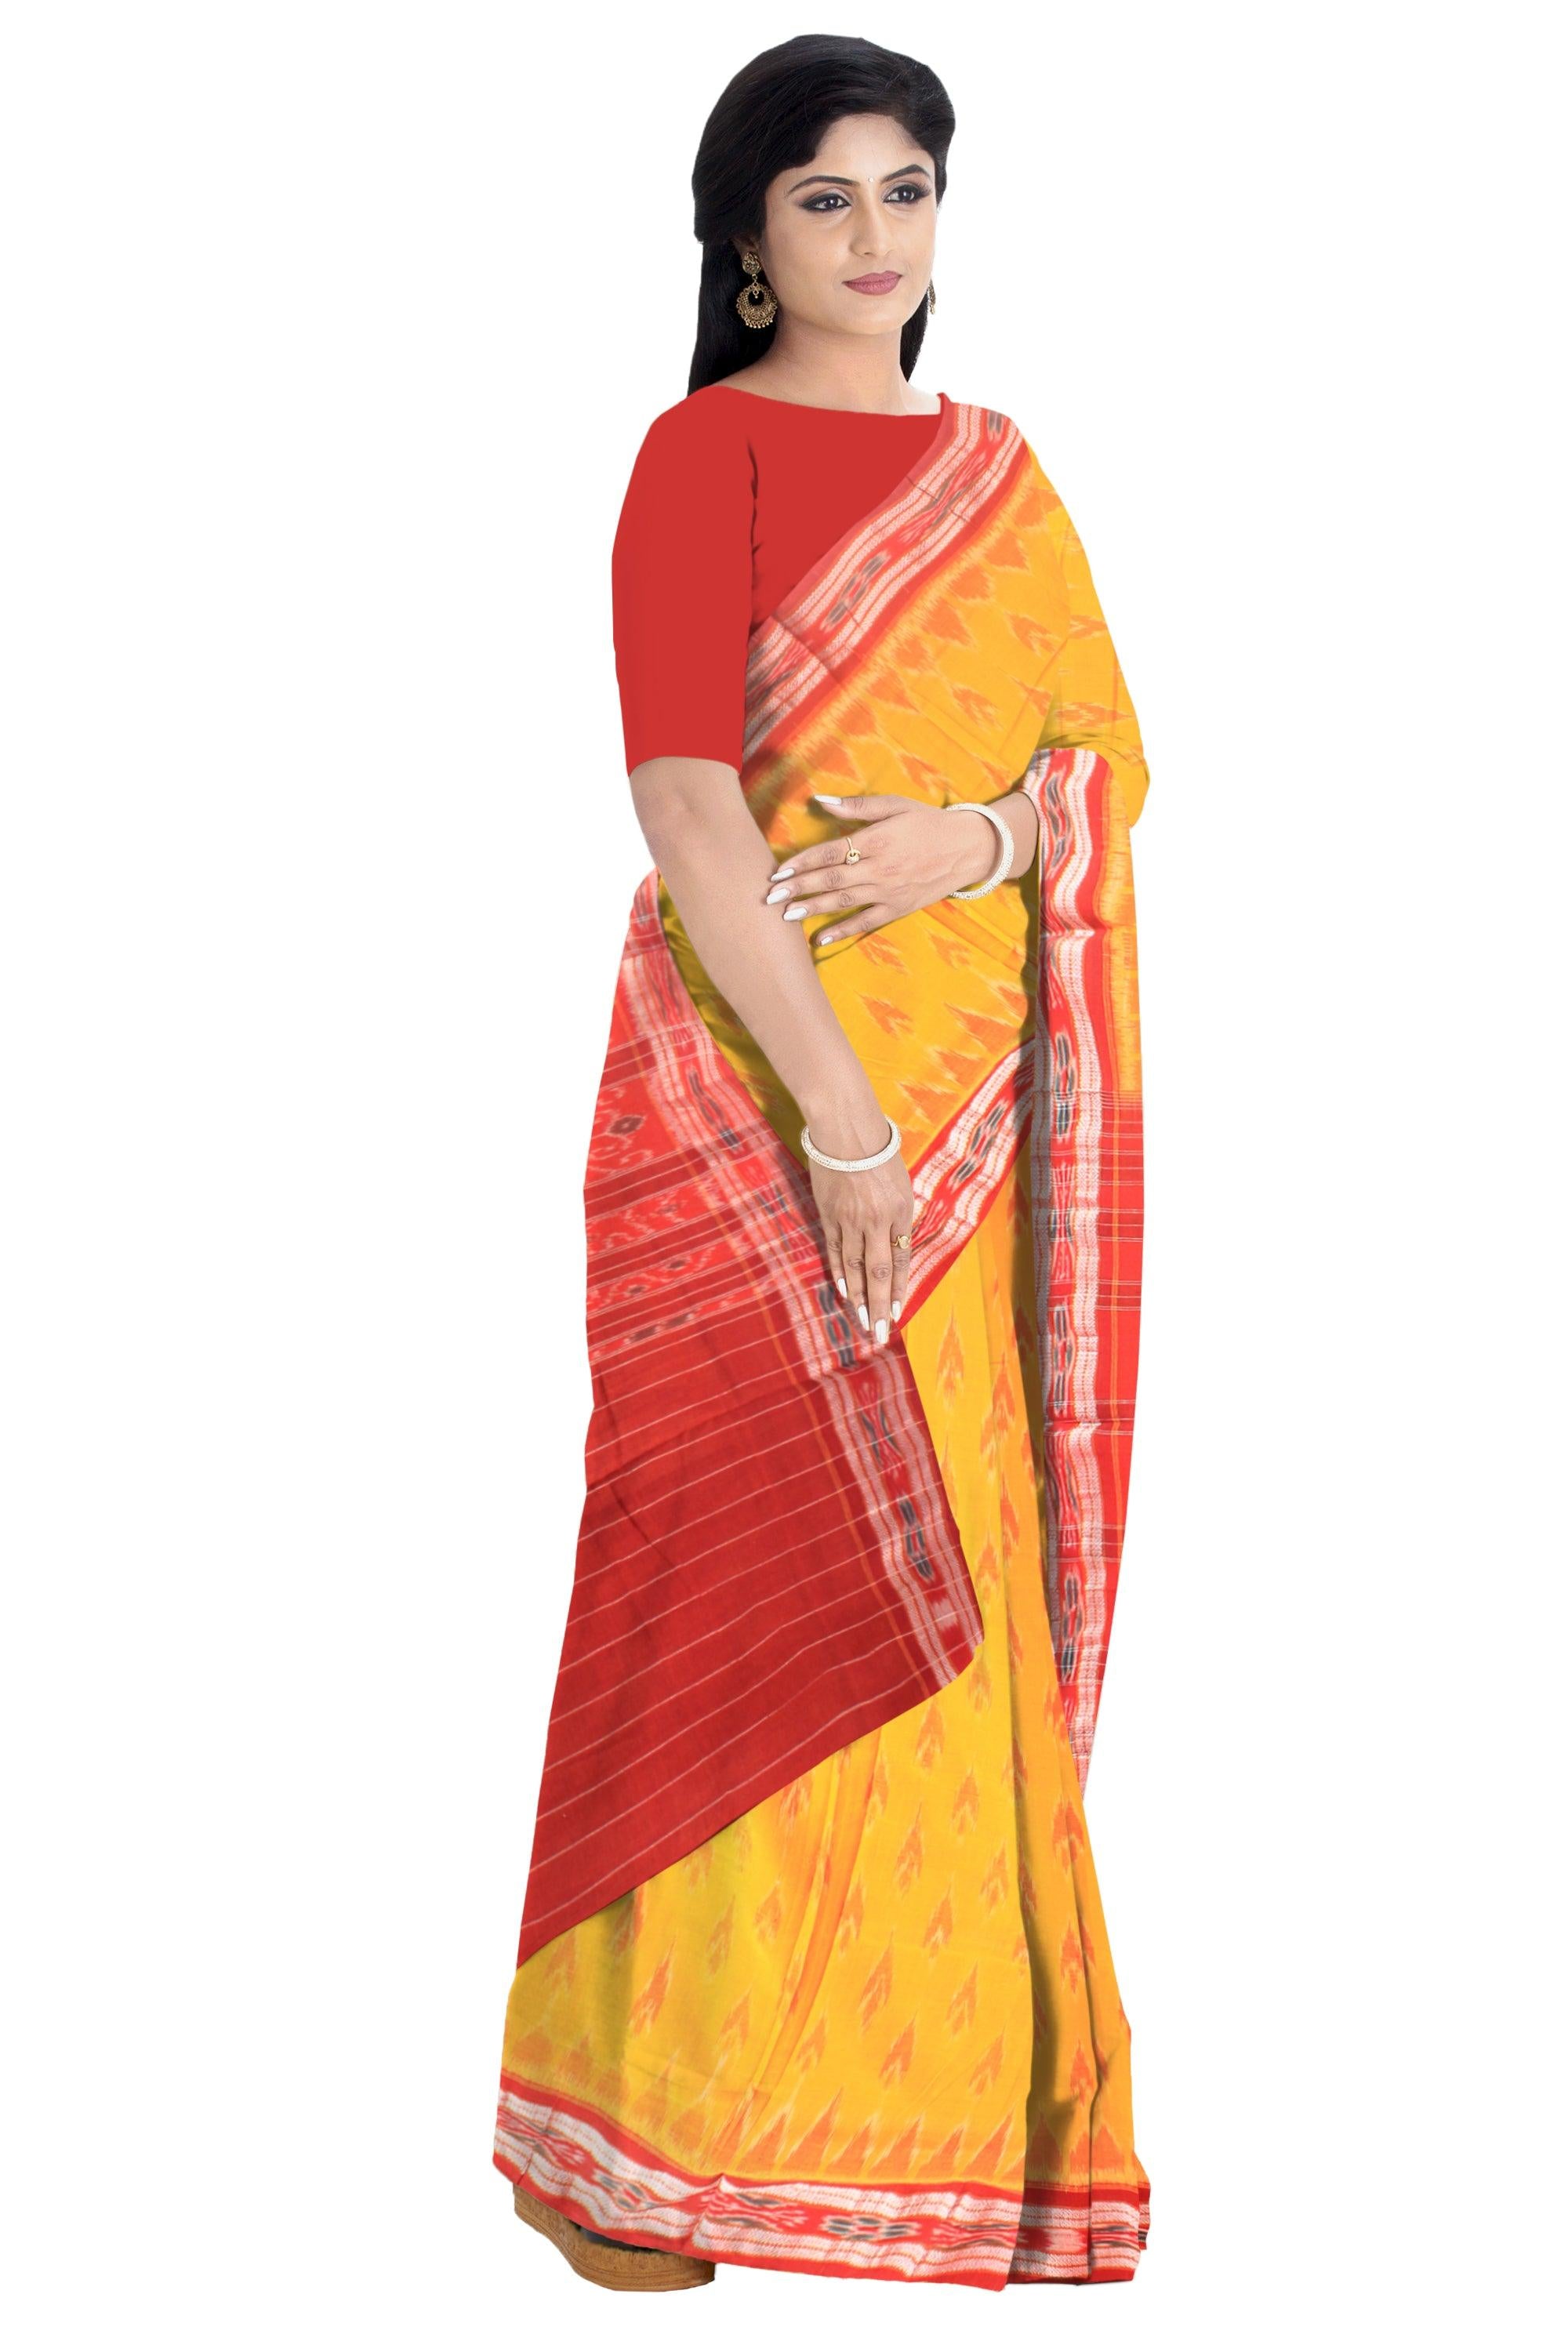 Sambalpuri Cotton saree in  Yellow and Red color - Koshali Arts & Crafts Enterprise